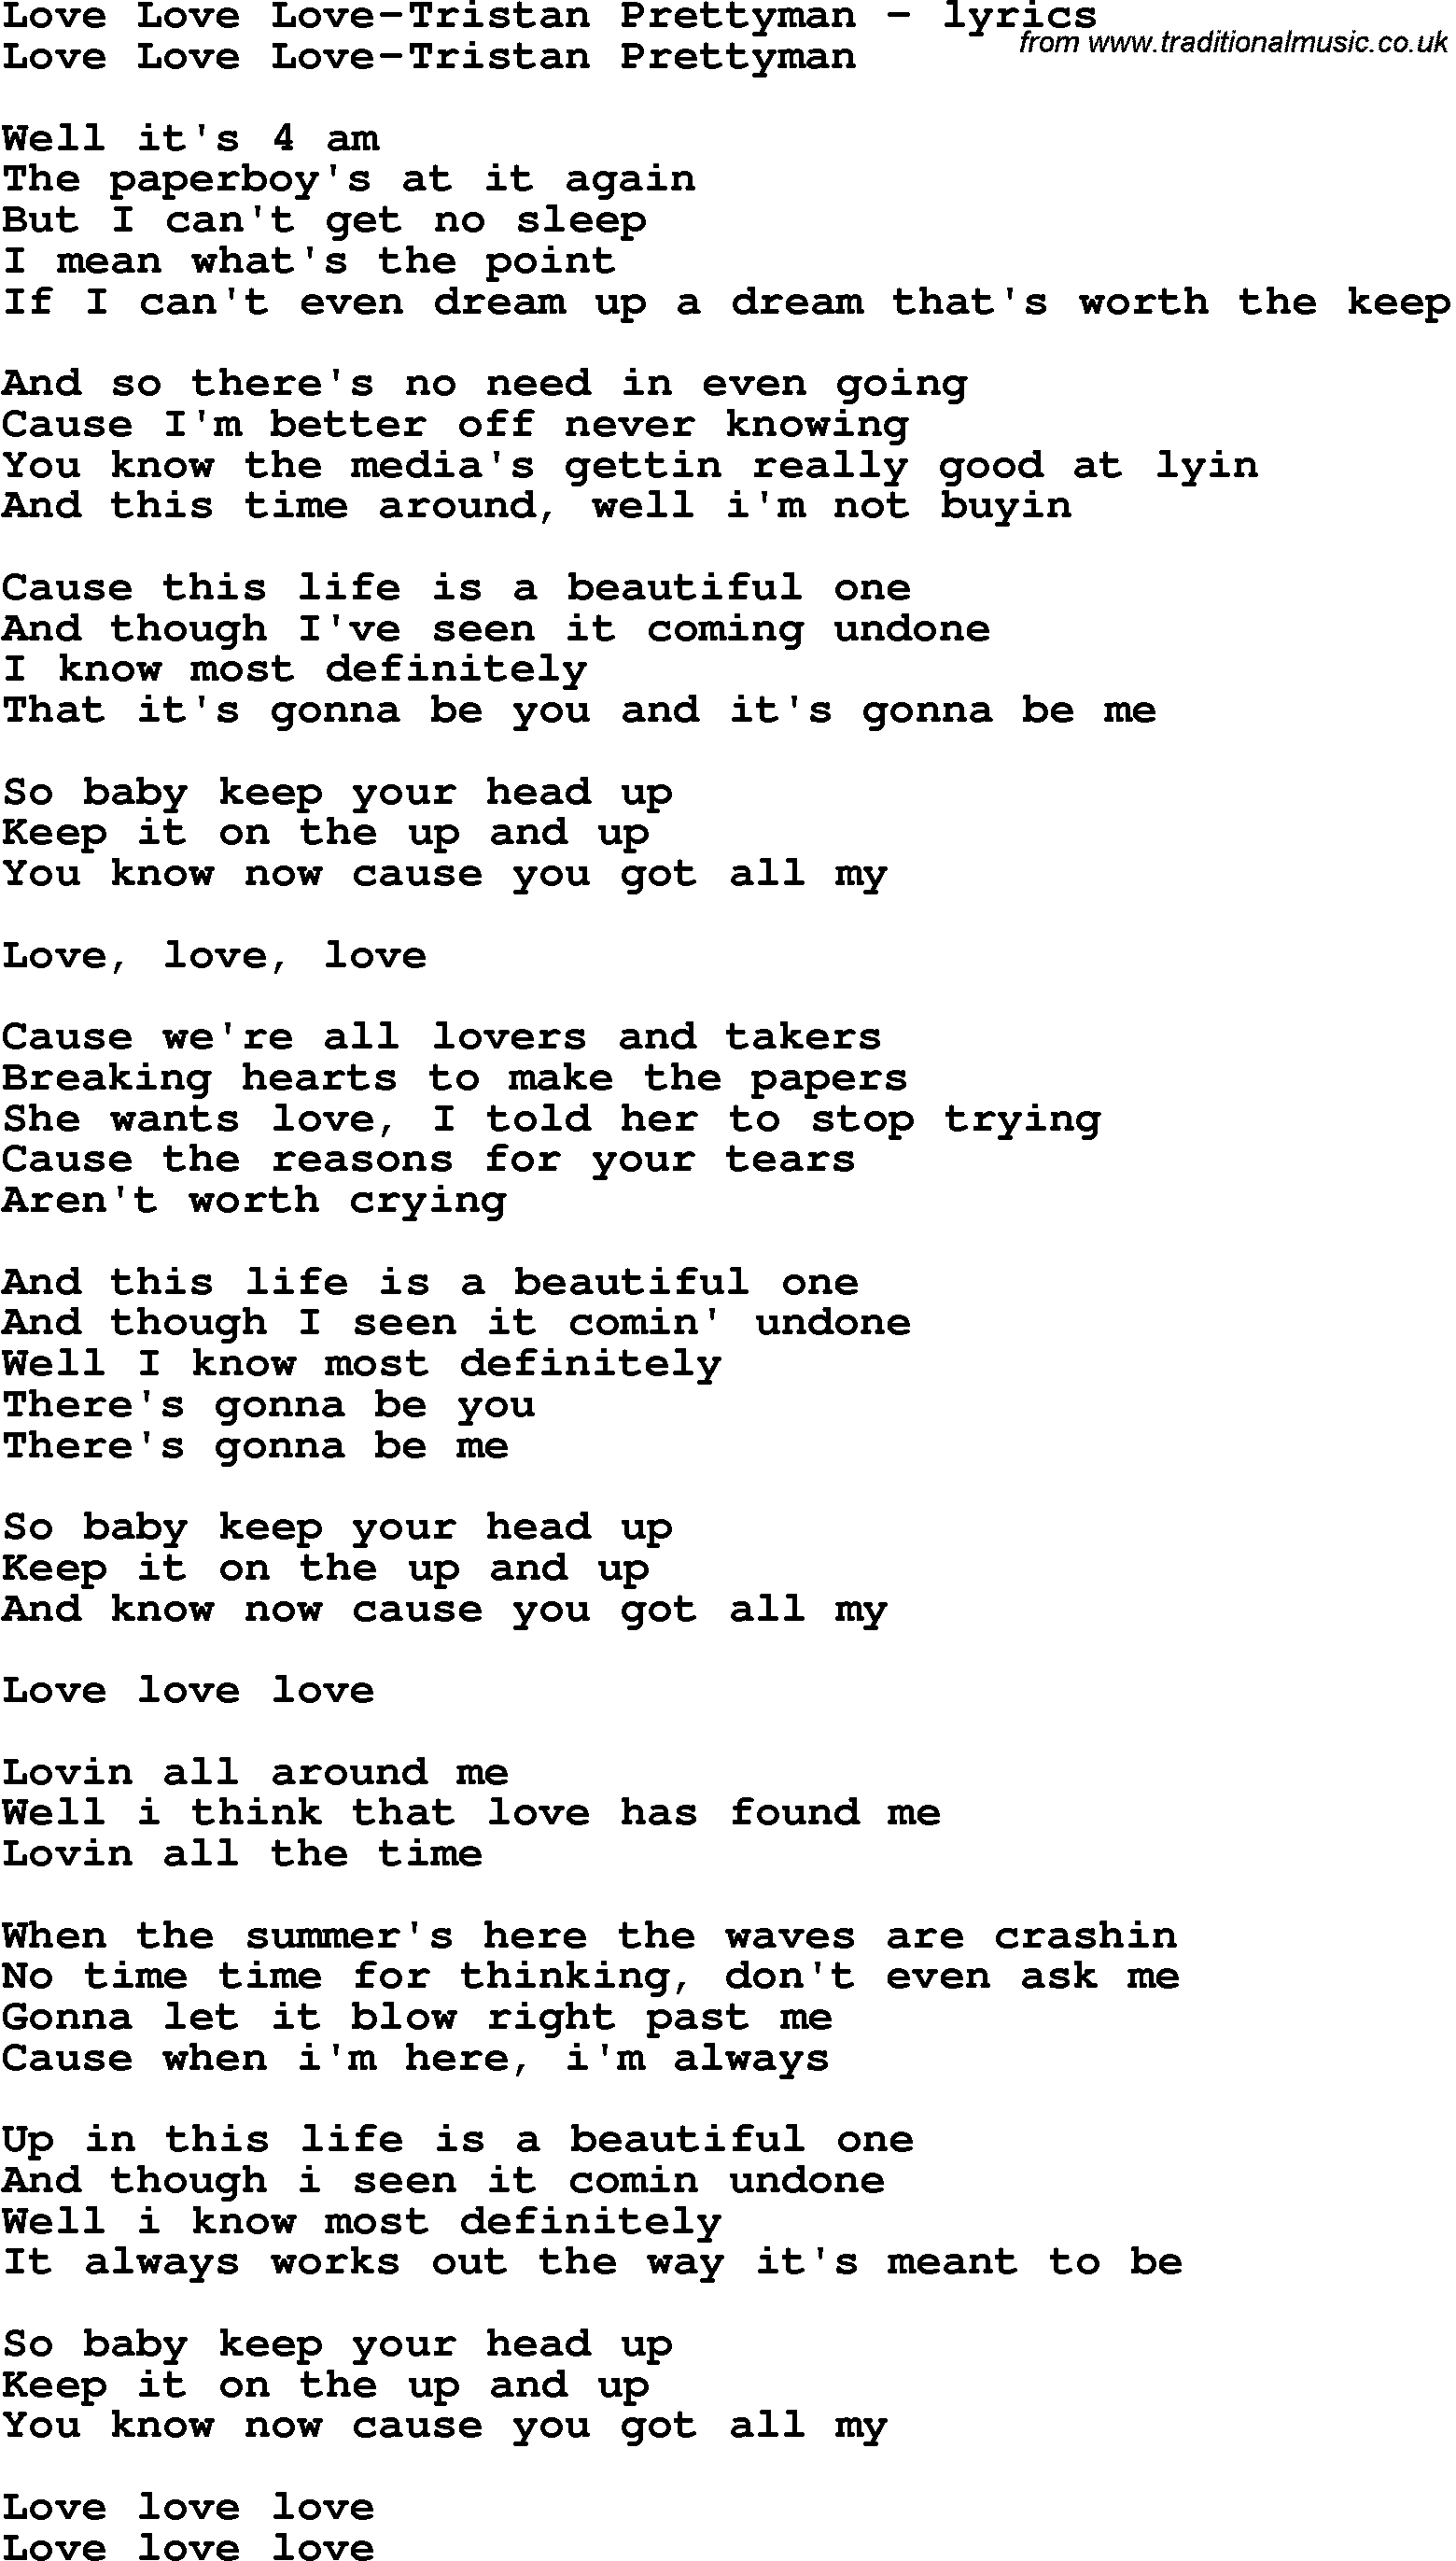 Love Song Lyrics for: Love Love Love-Tristan Prettyman